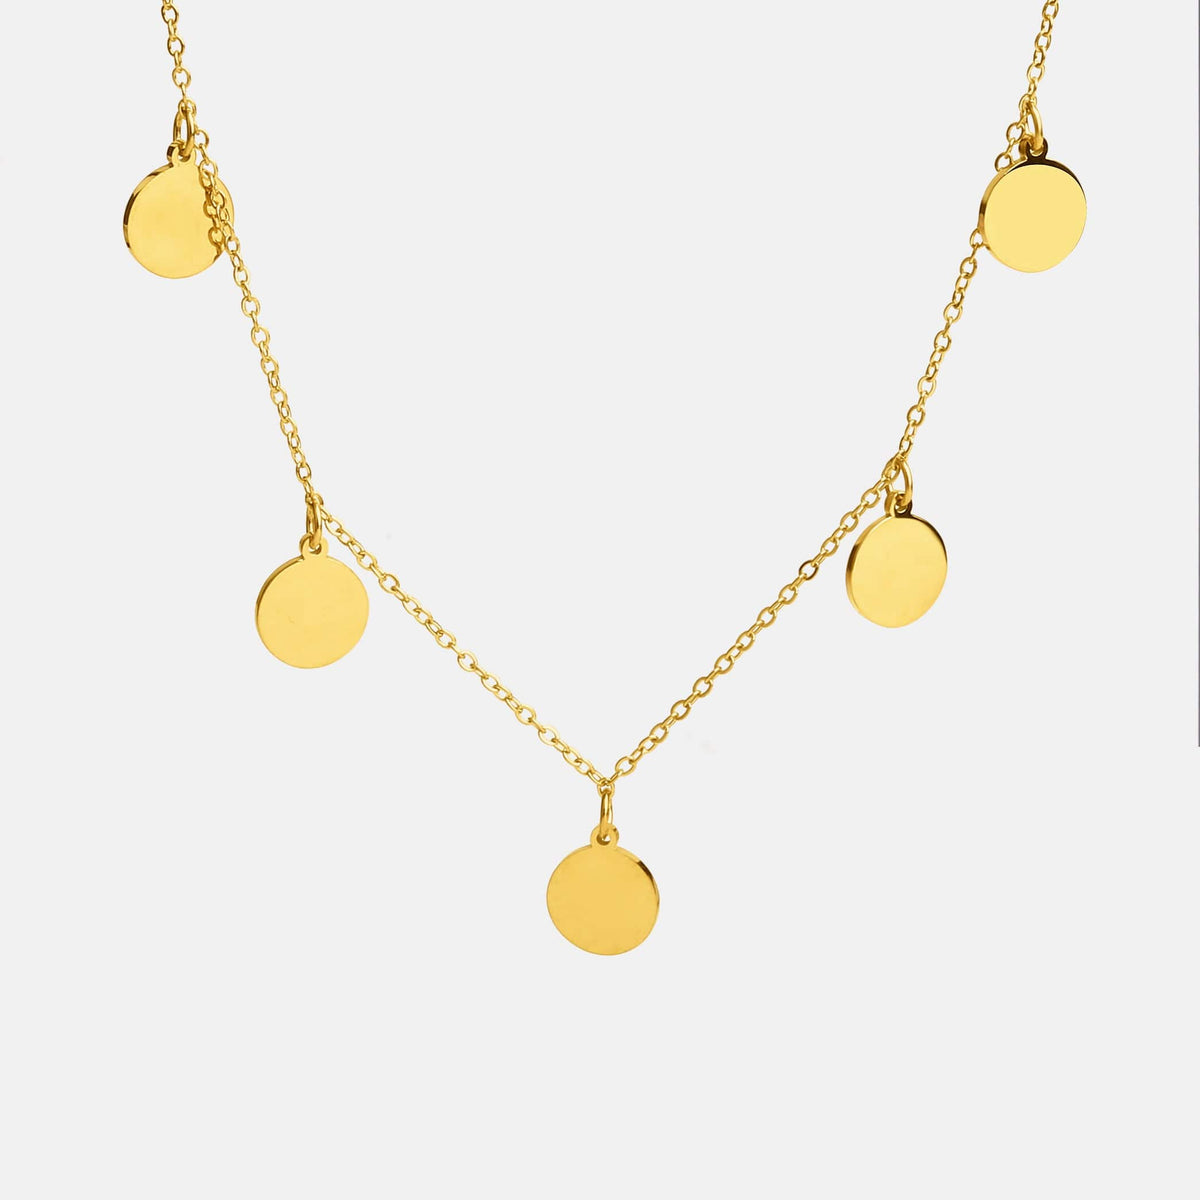 Sierra necklace